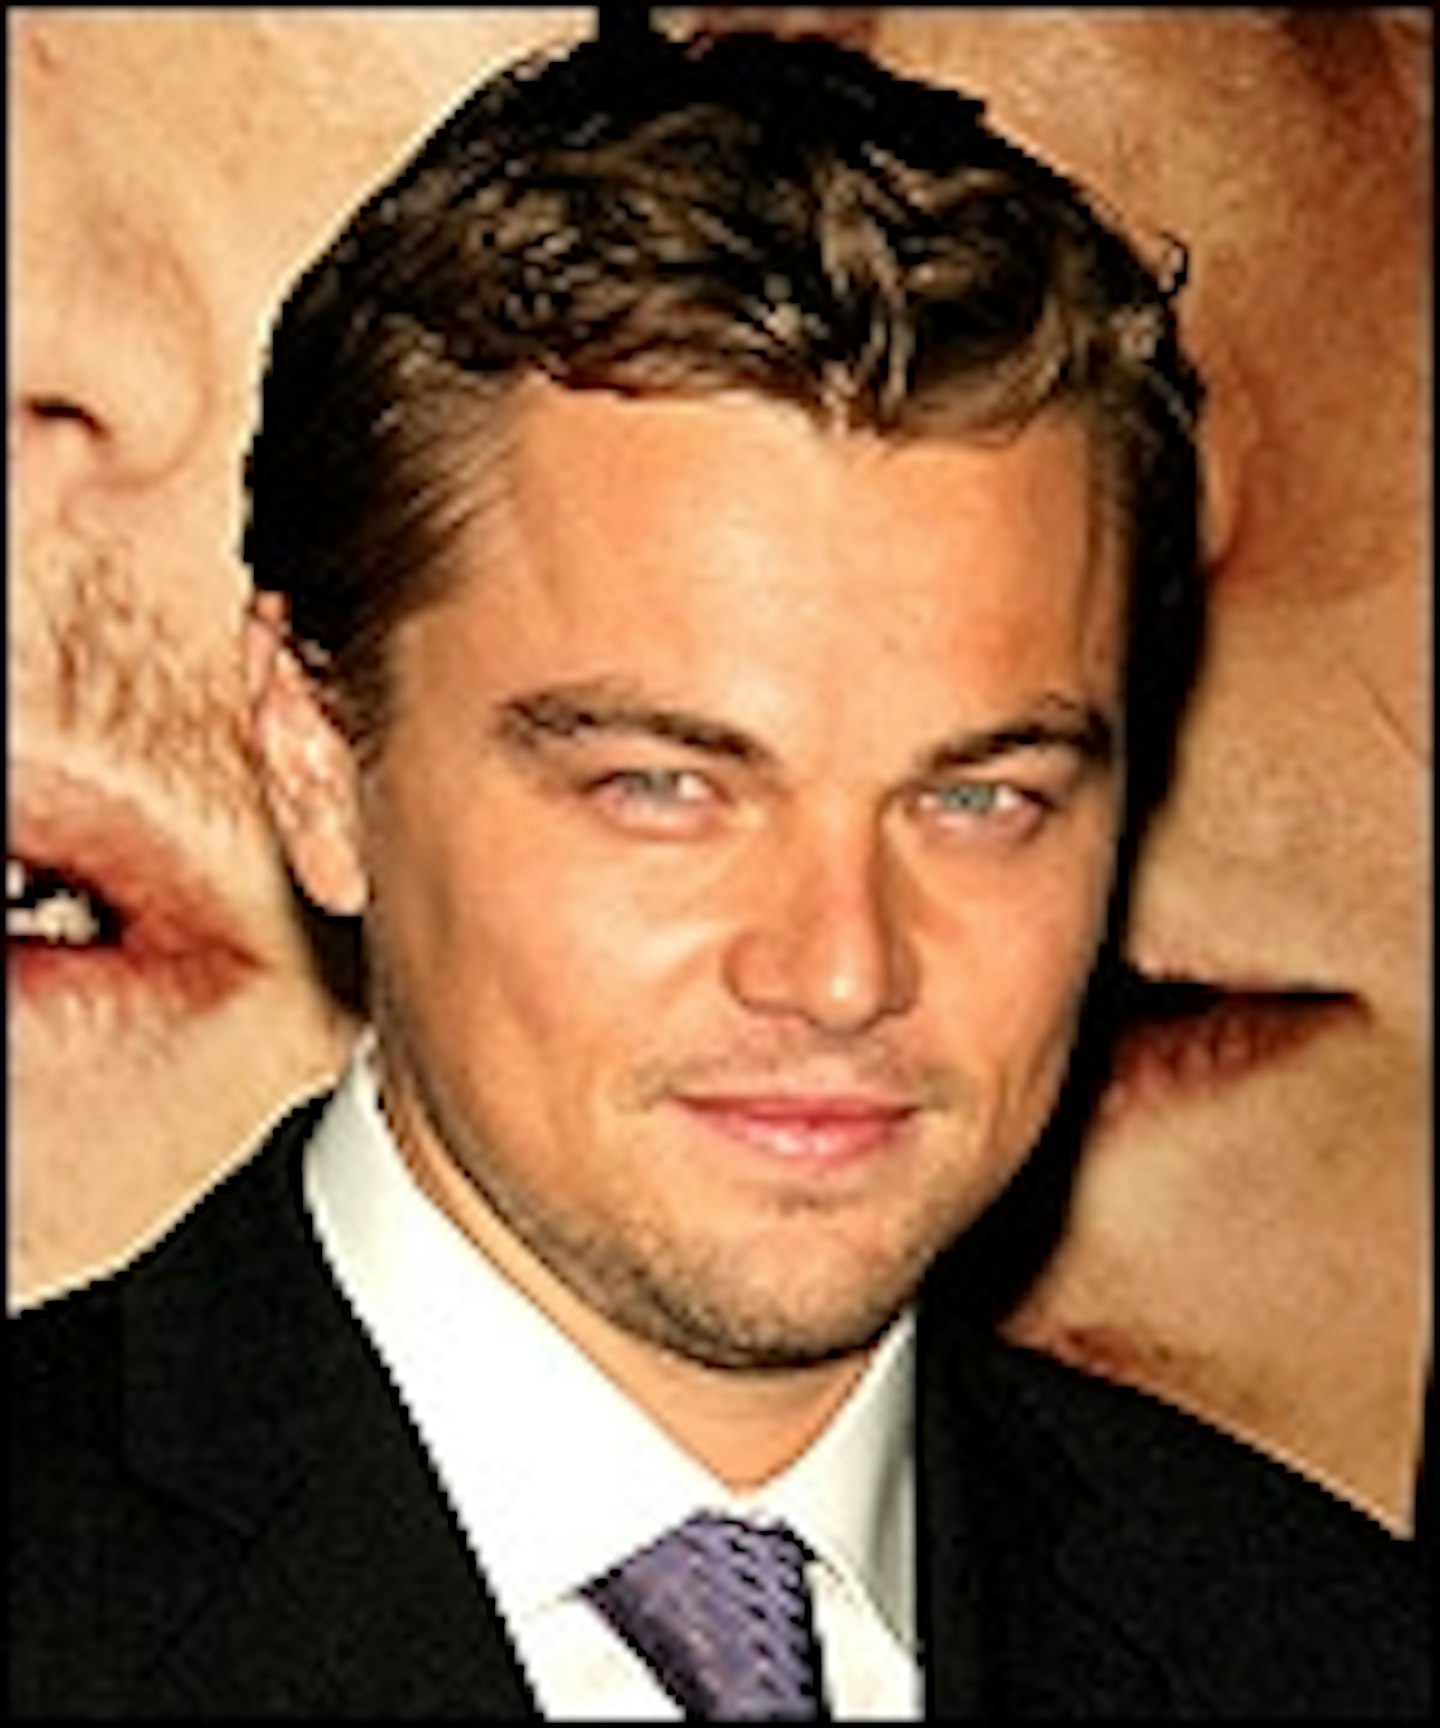 Leo DiCaprio Going Viking?